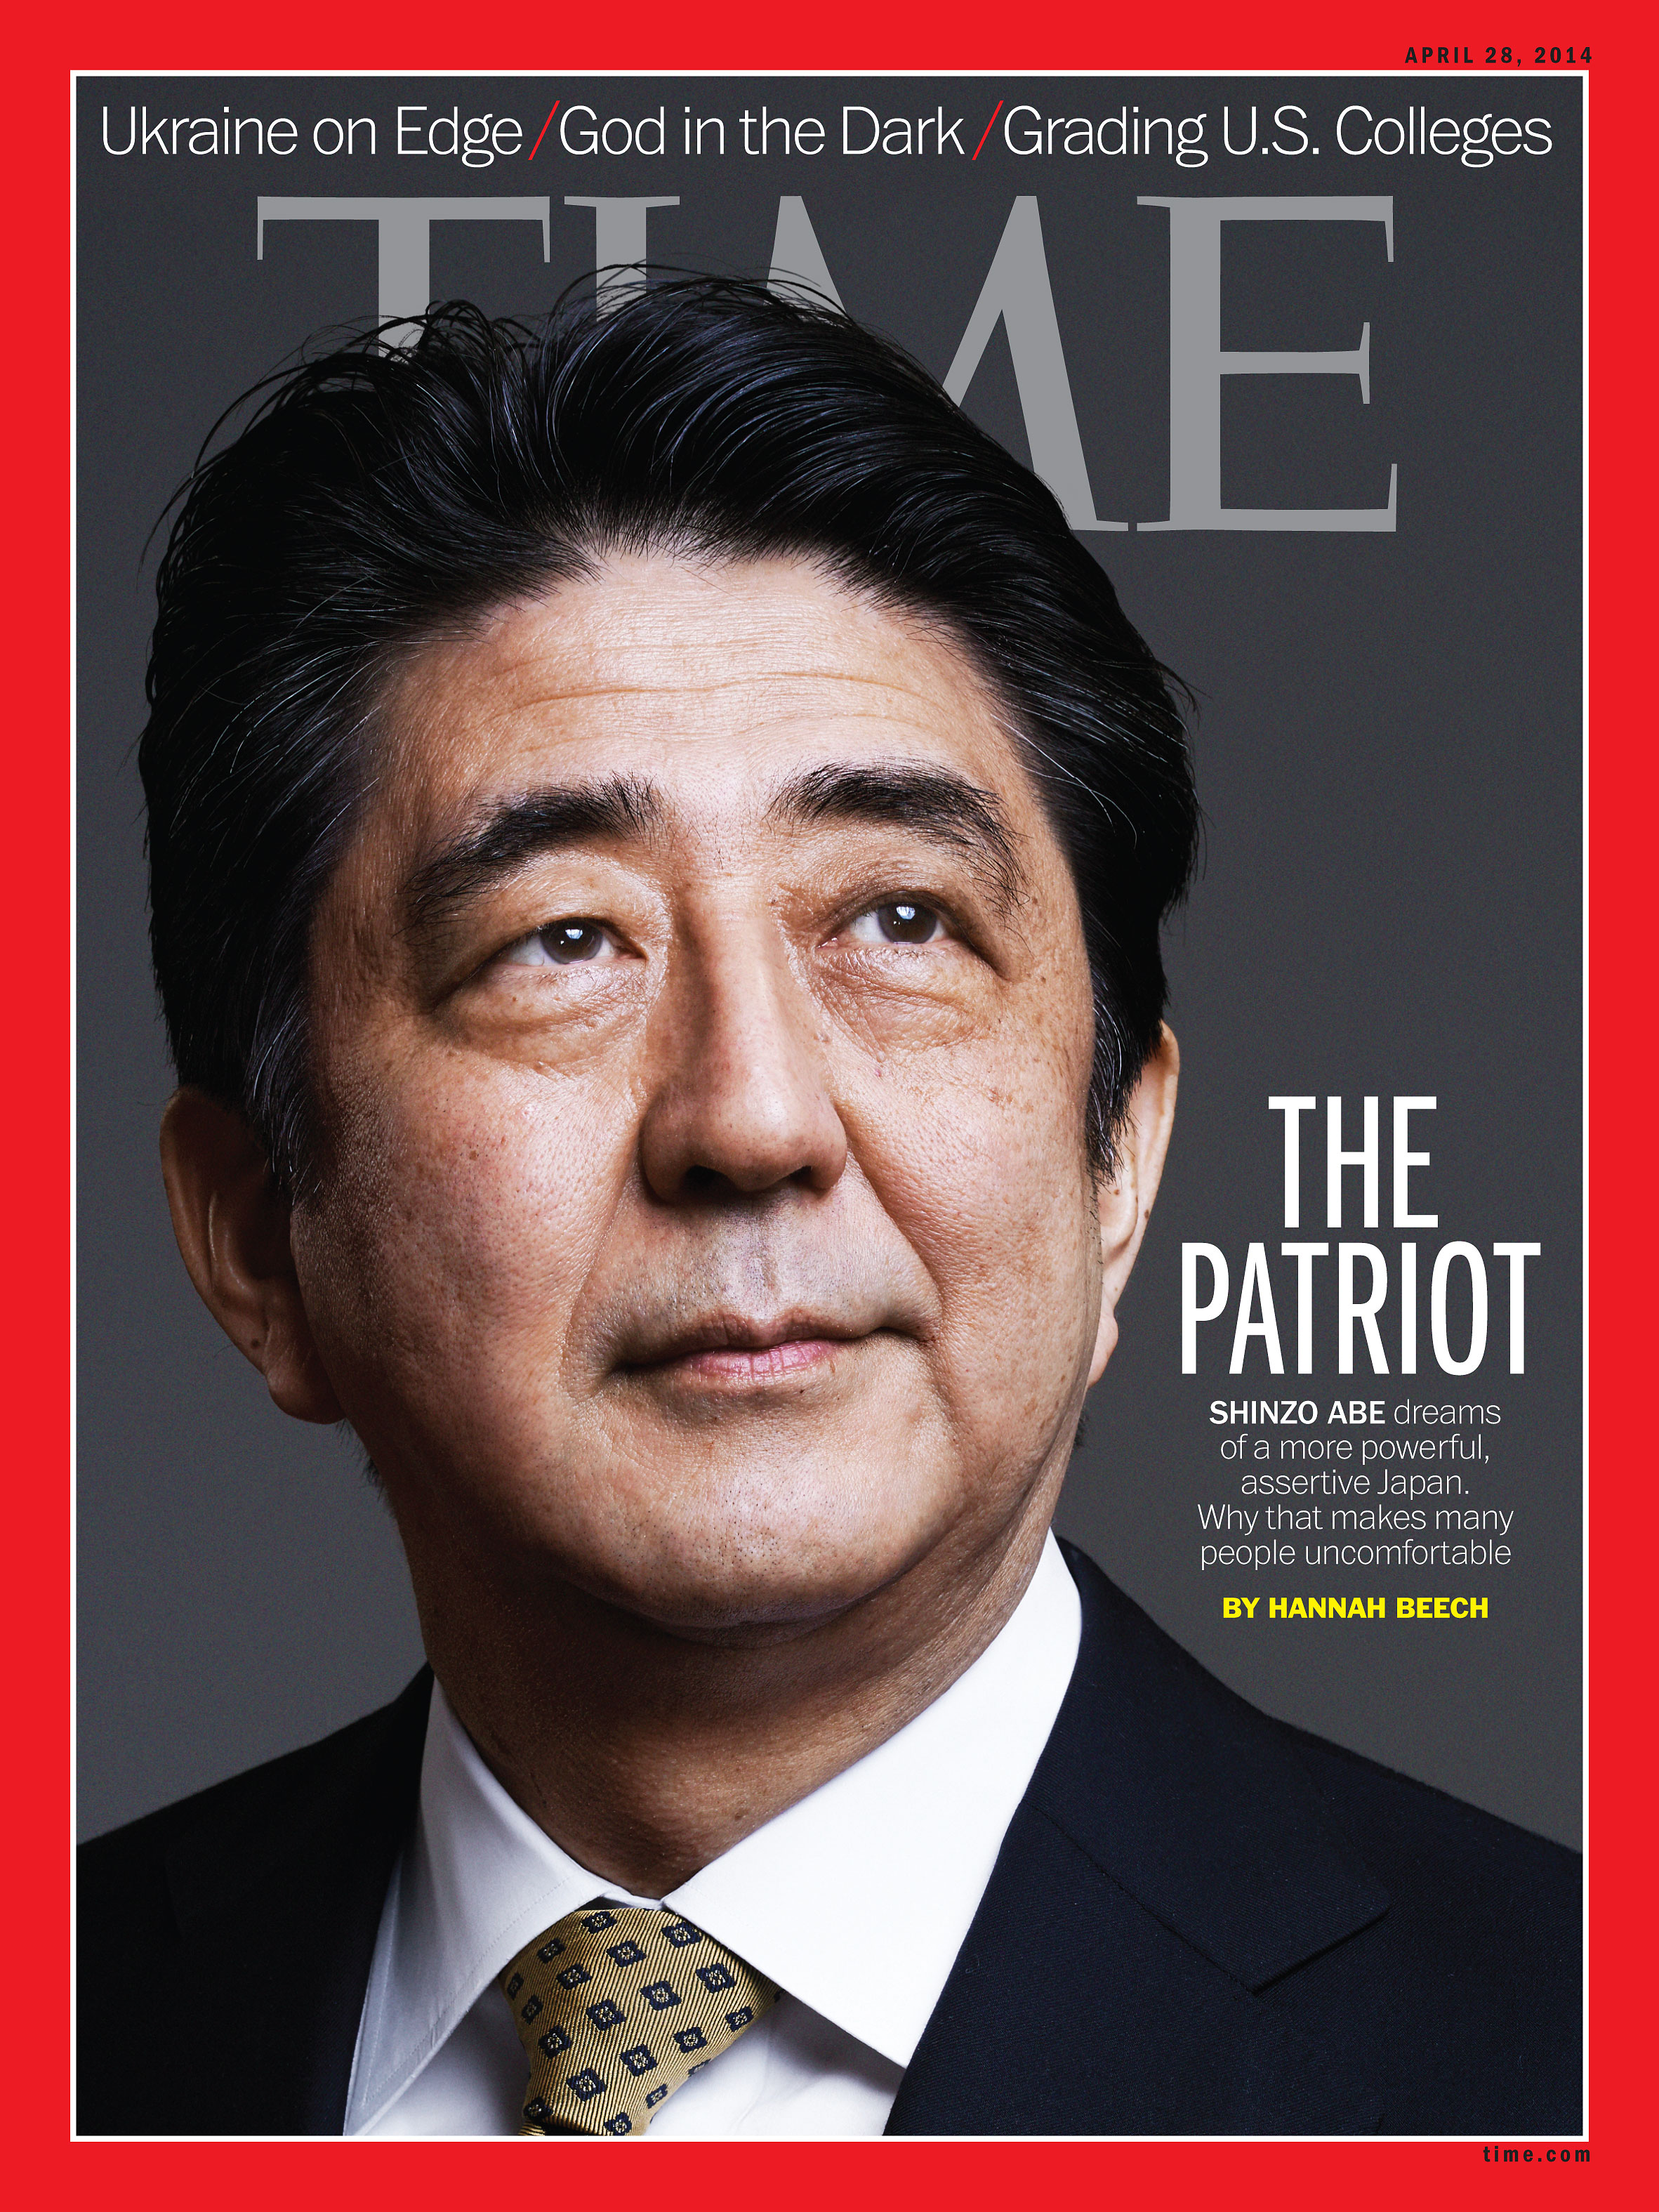 TIME International Magazine Cover, April 28, 2014